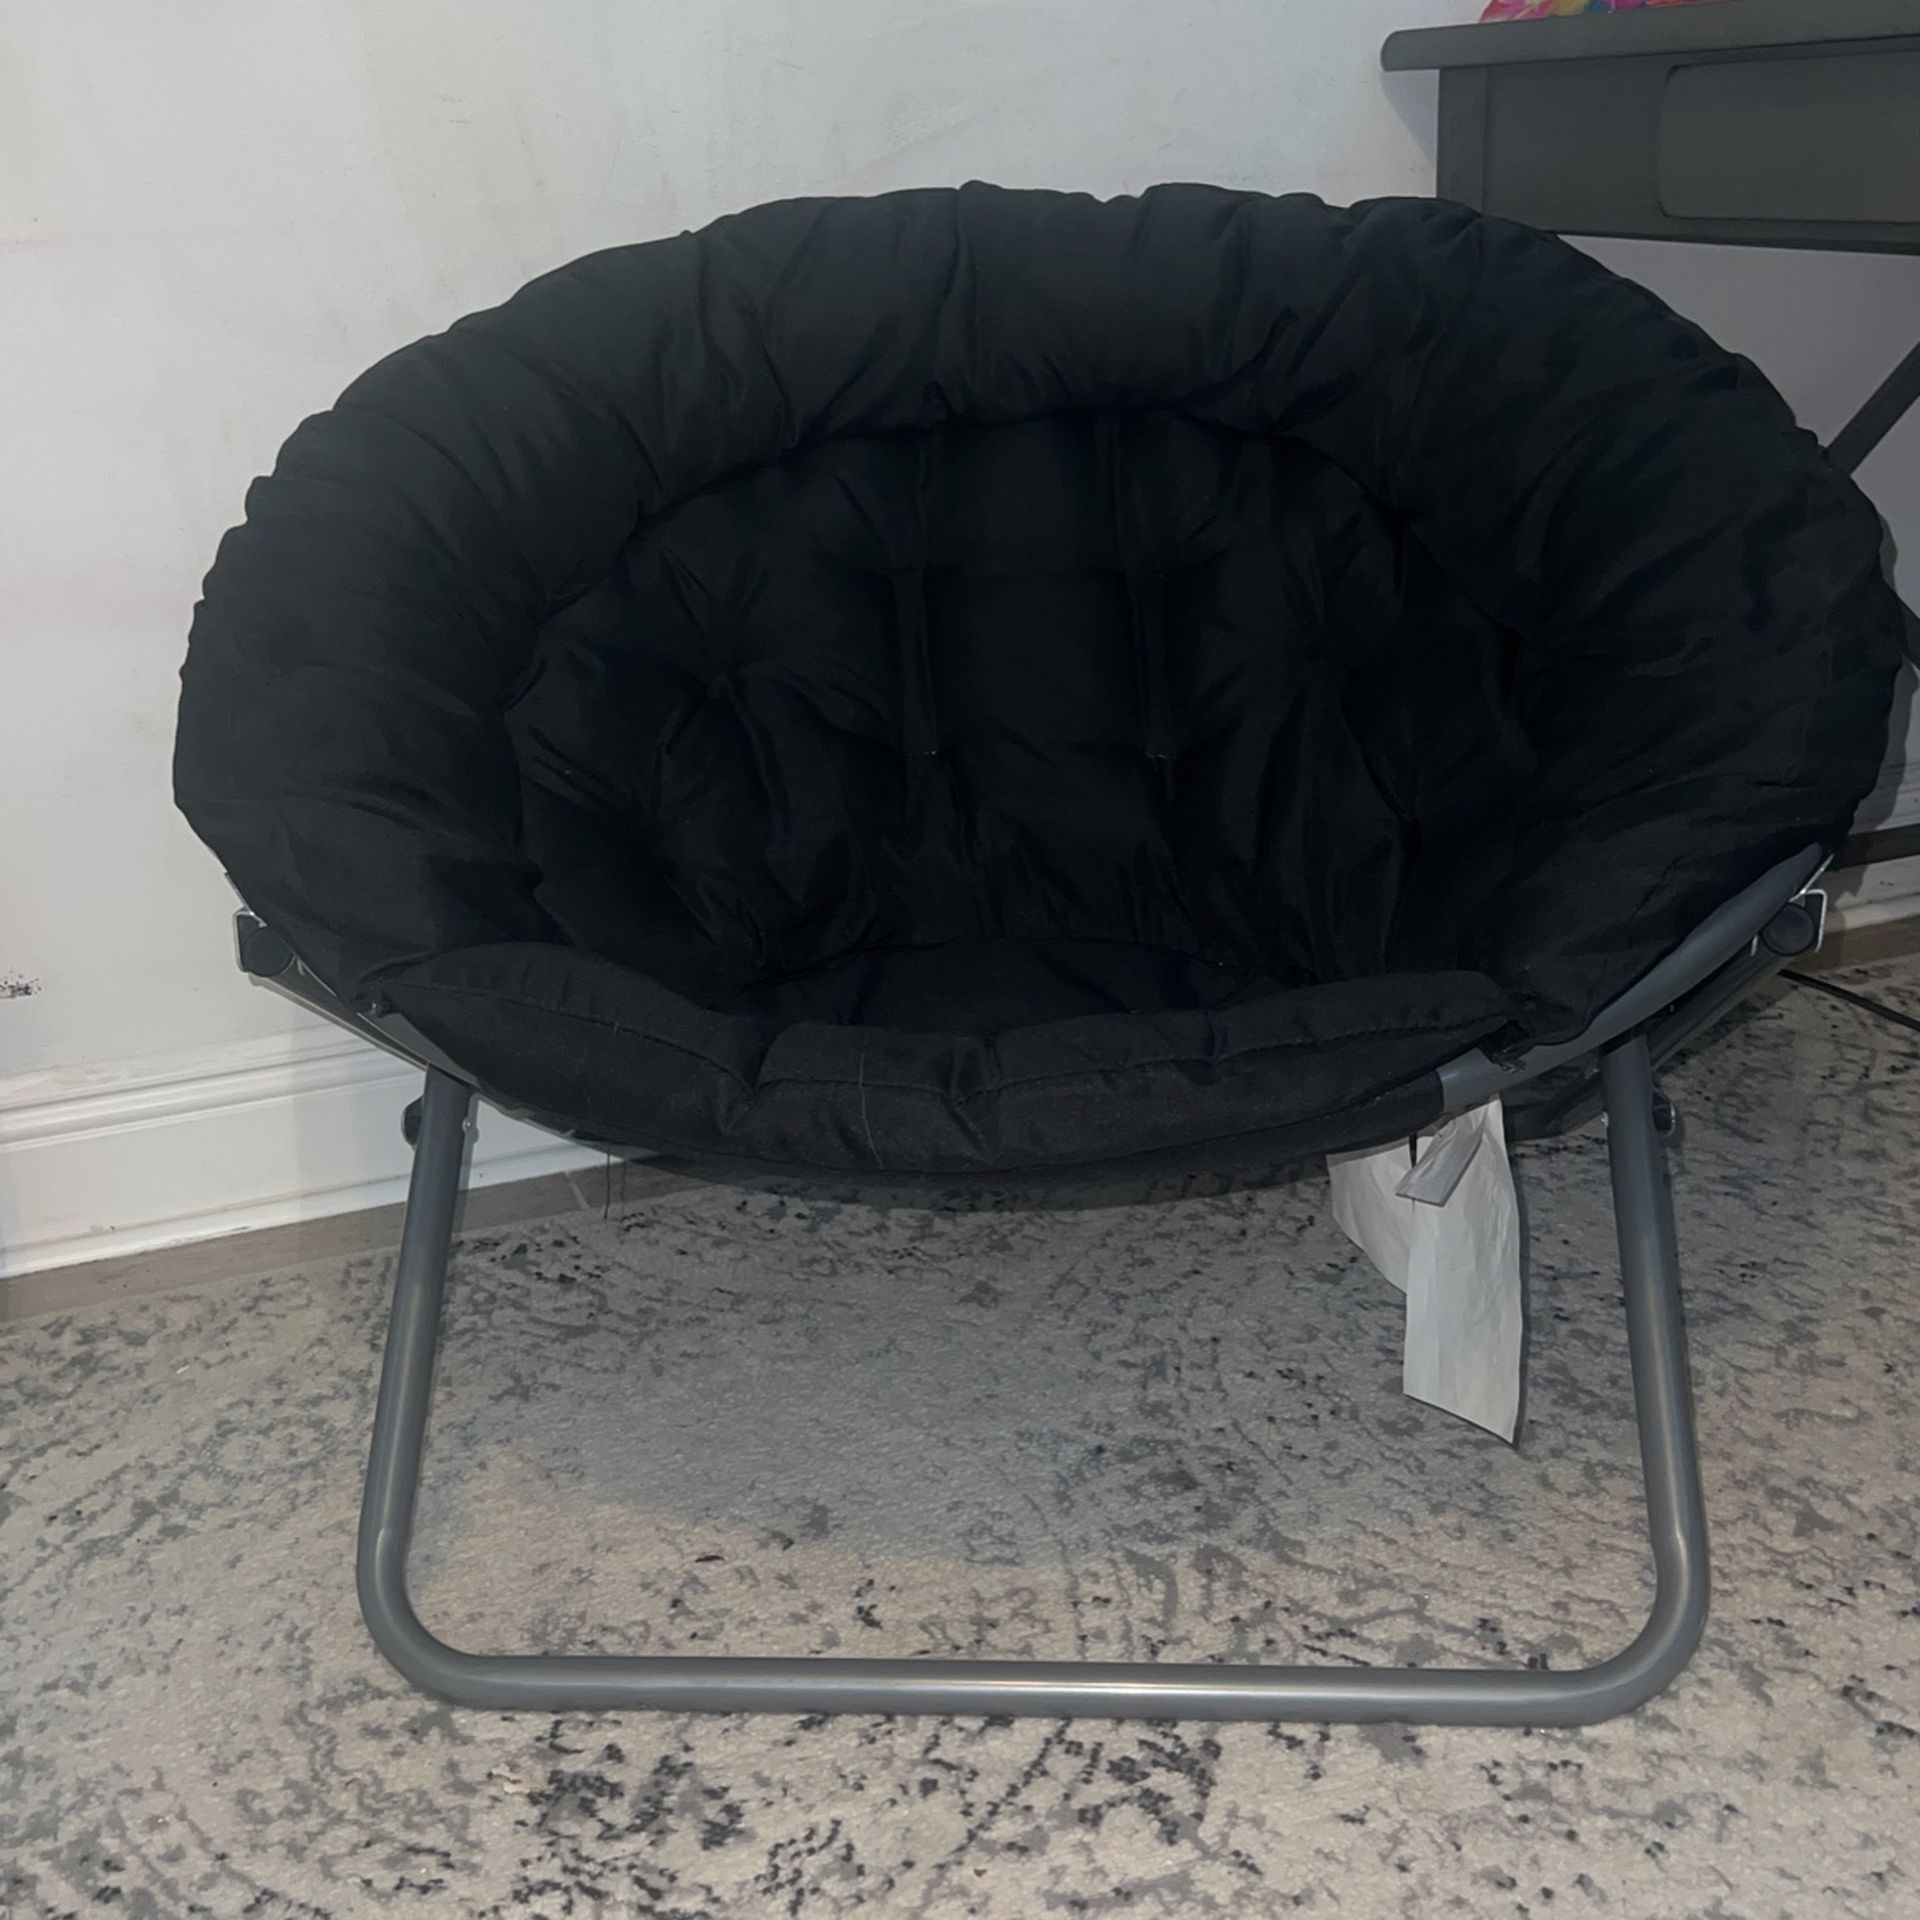 Round Folding Chair